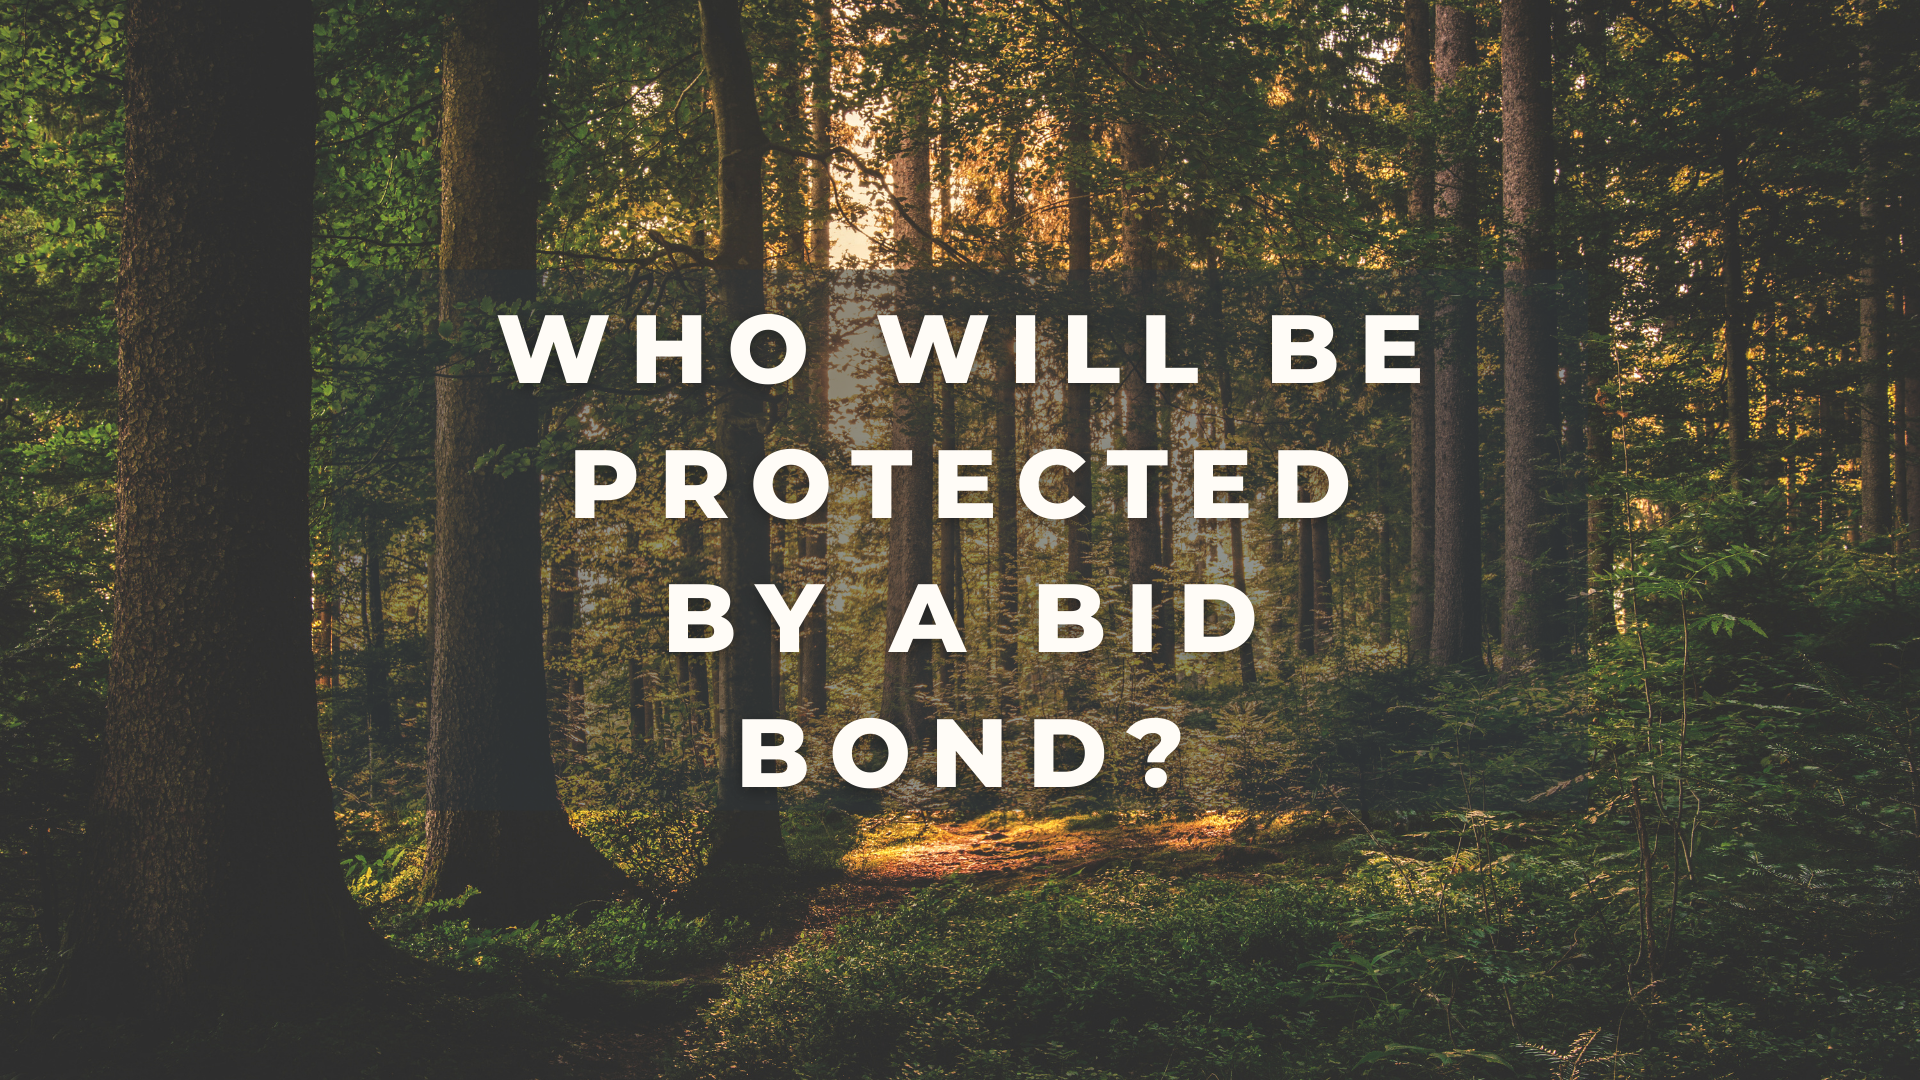 bid bond - What is a bid bond - forest